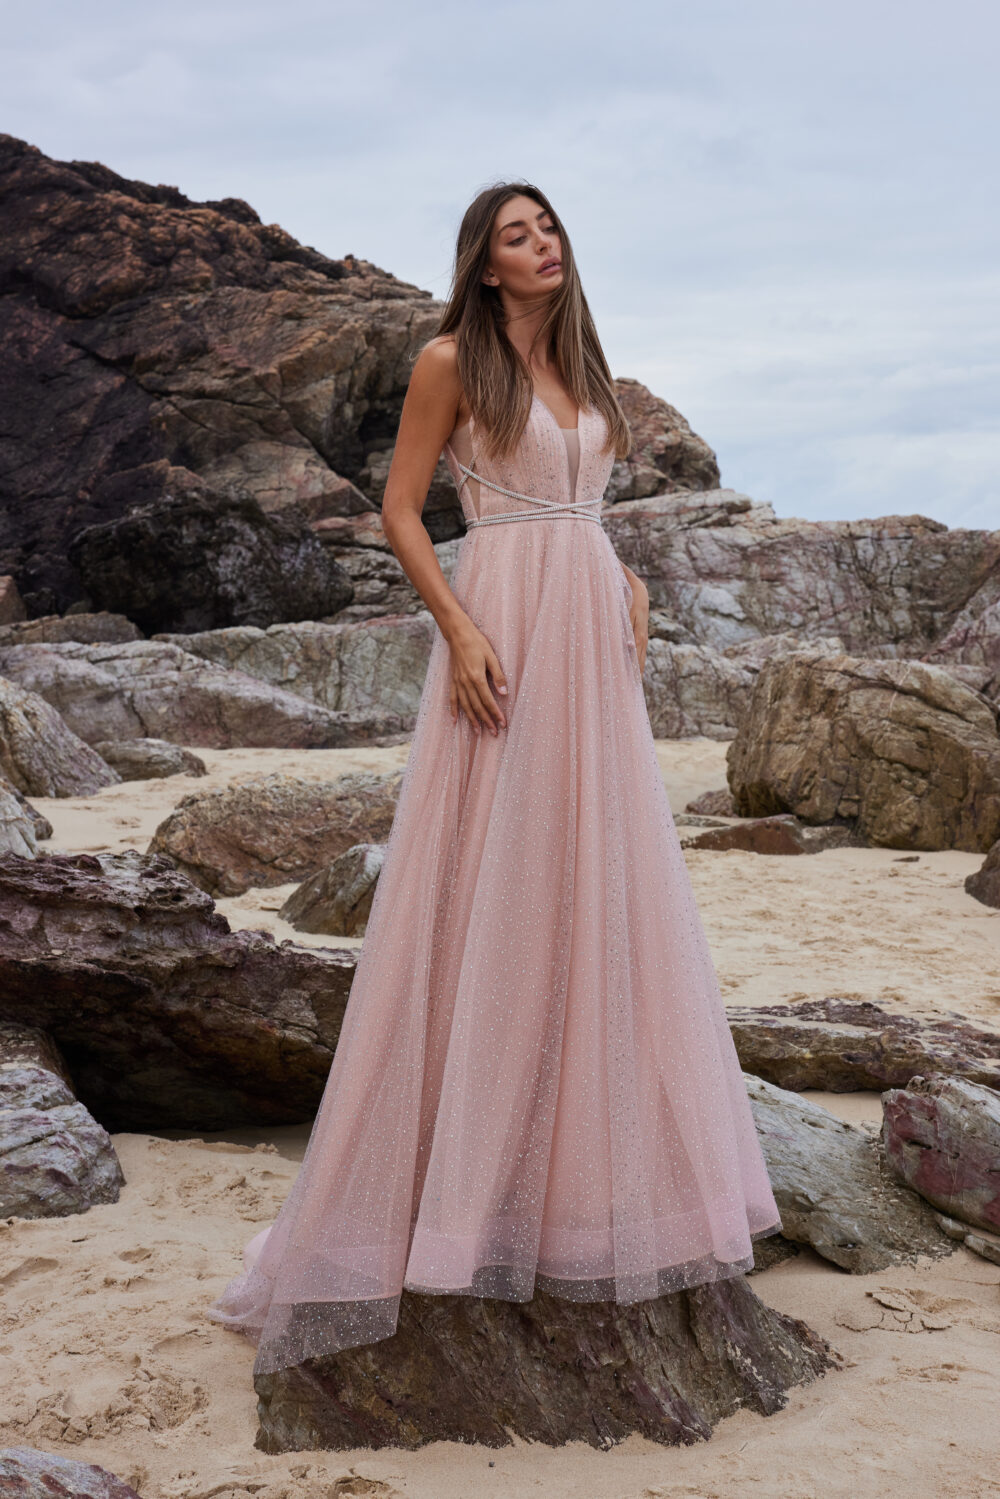 WATTLE PO947 Evening & Formal dress by Tania Olsen Designs